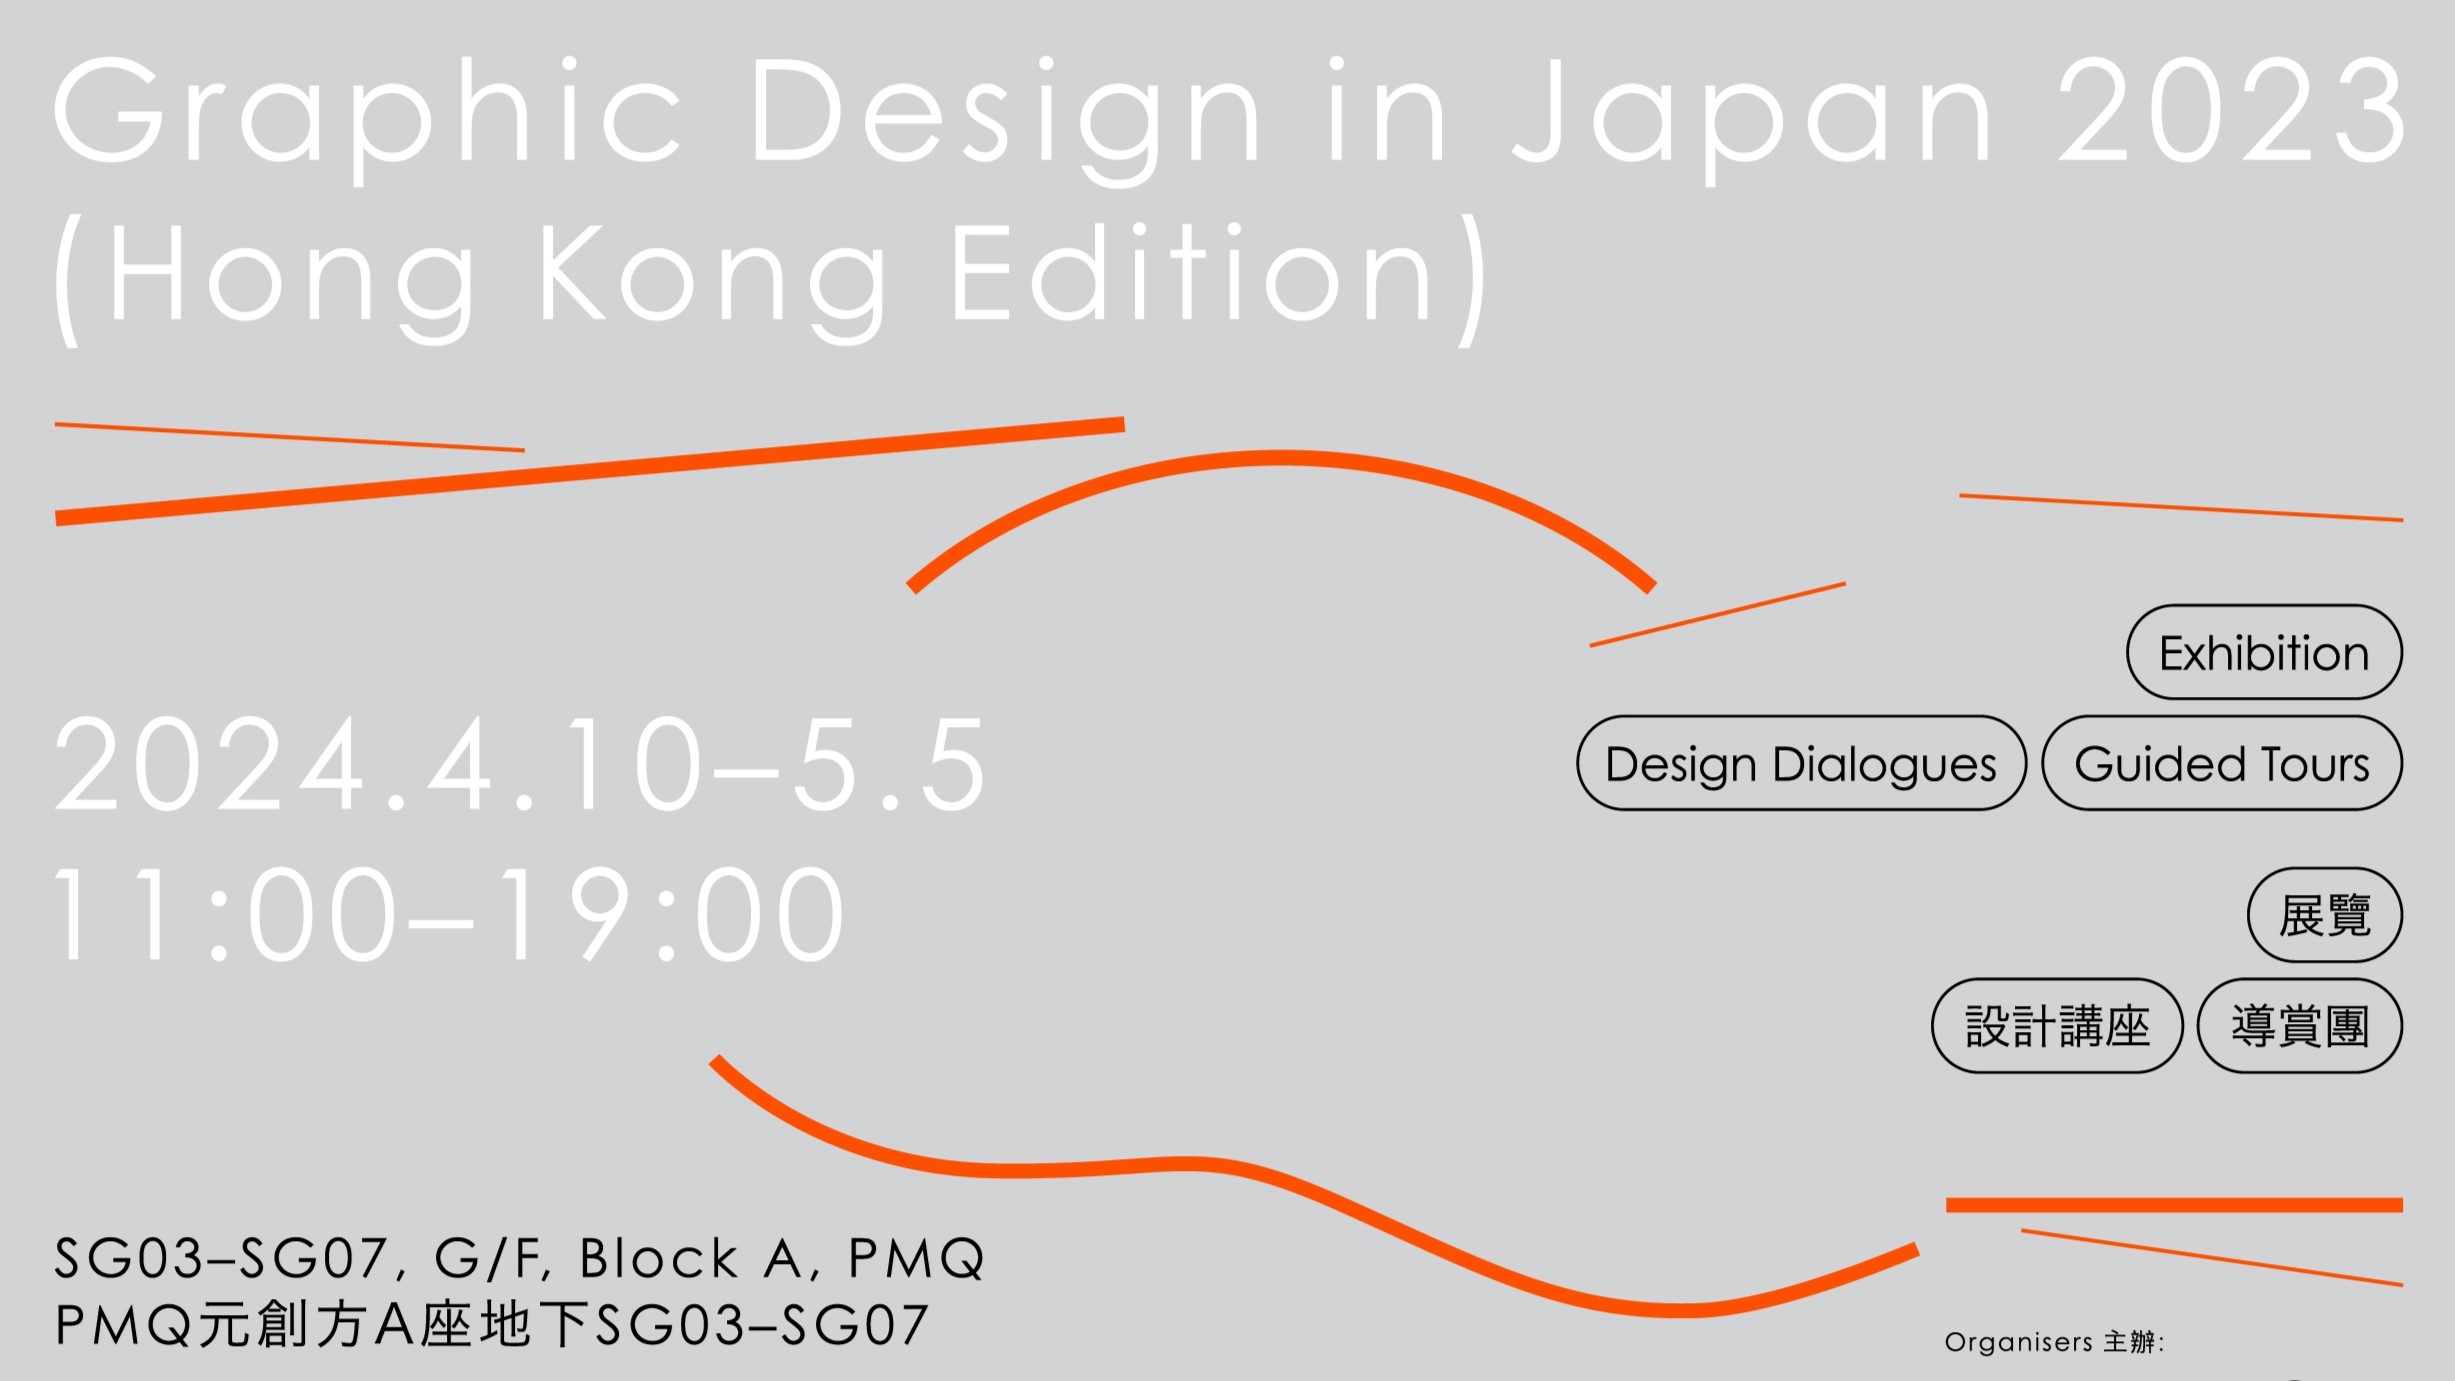 PMQ元創方將舉行「Graphic Design in Japan 2023」 展現日本前沿設計視野